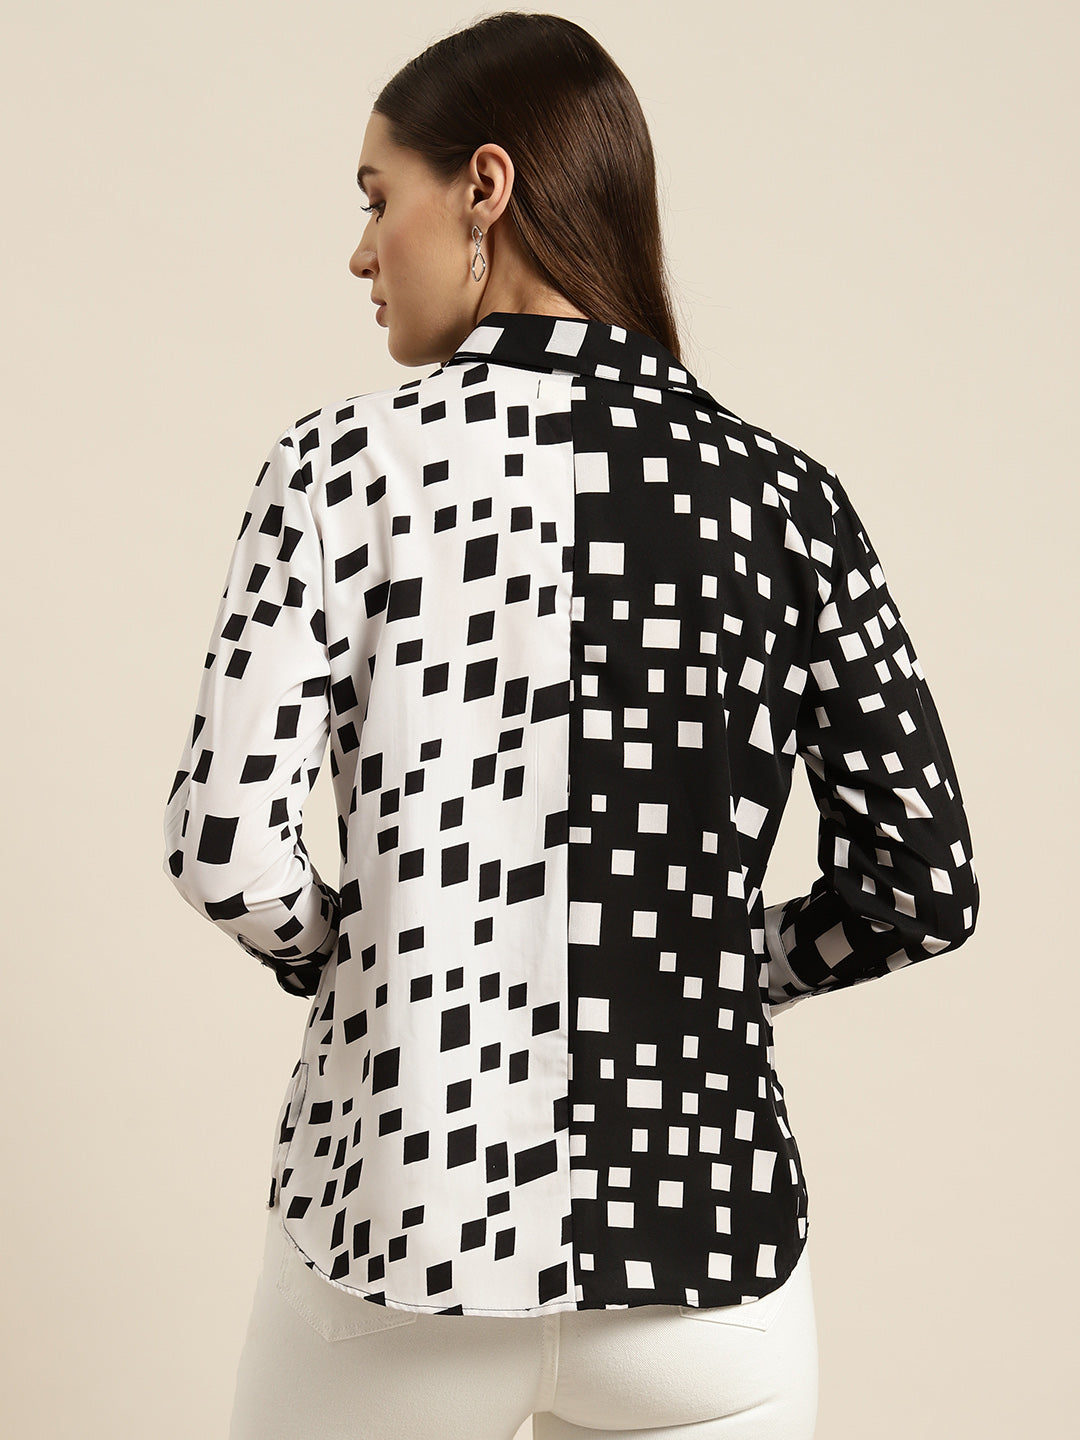 Black & white Geometric Print Shirt.